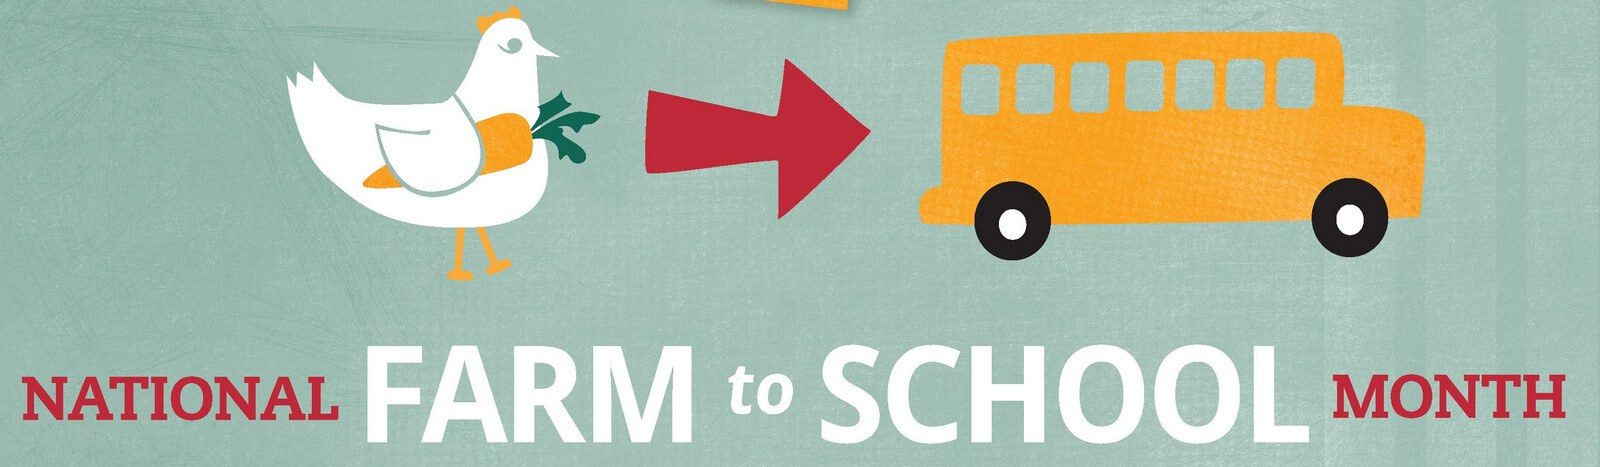 farm-to-school month banner.jpg